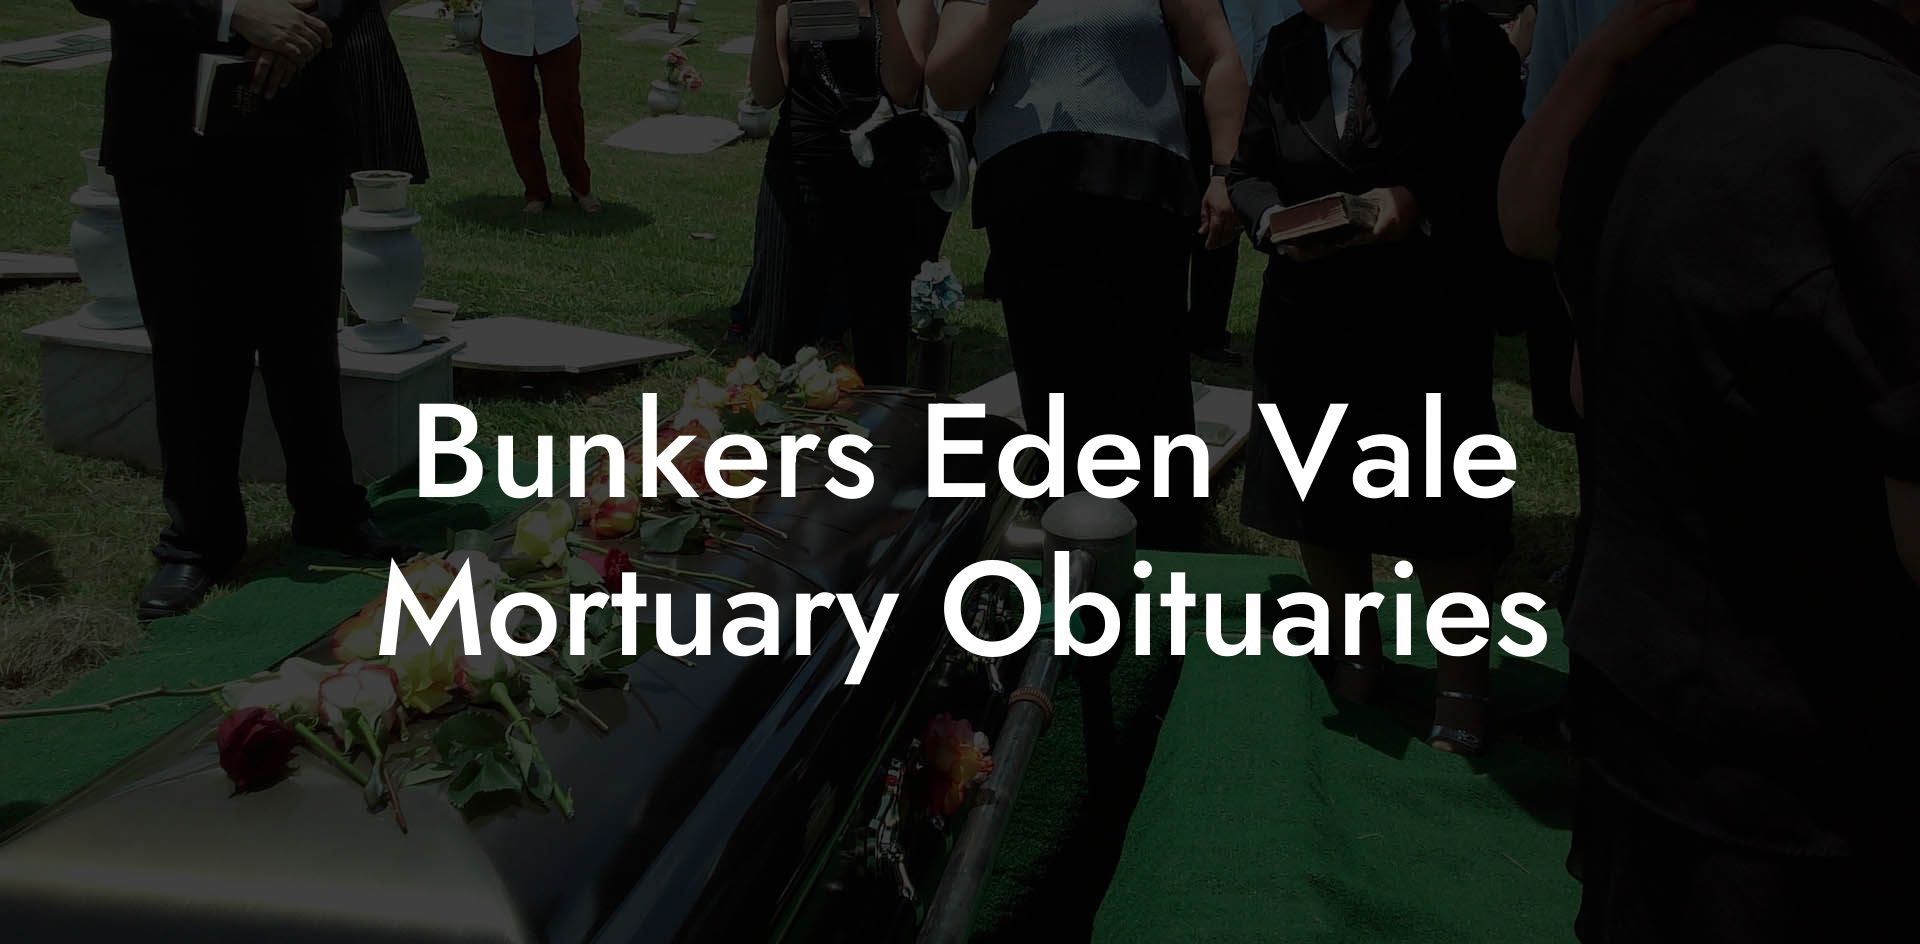 Bunkers Eden Vale Mortuary Obituaries